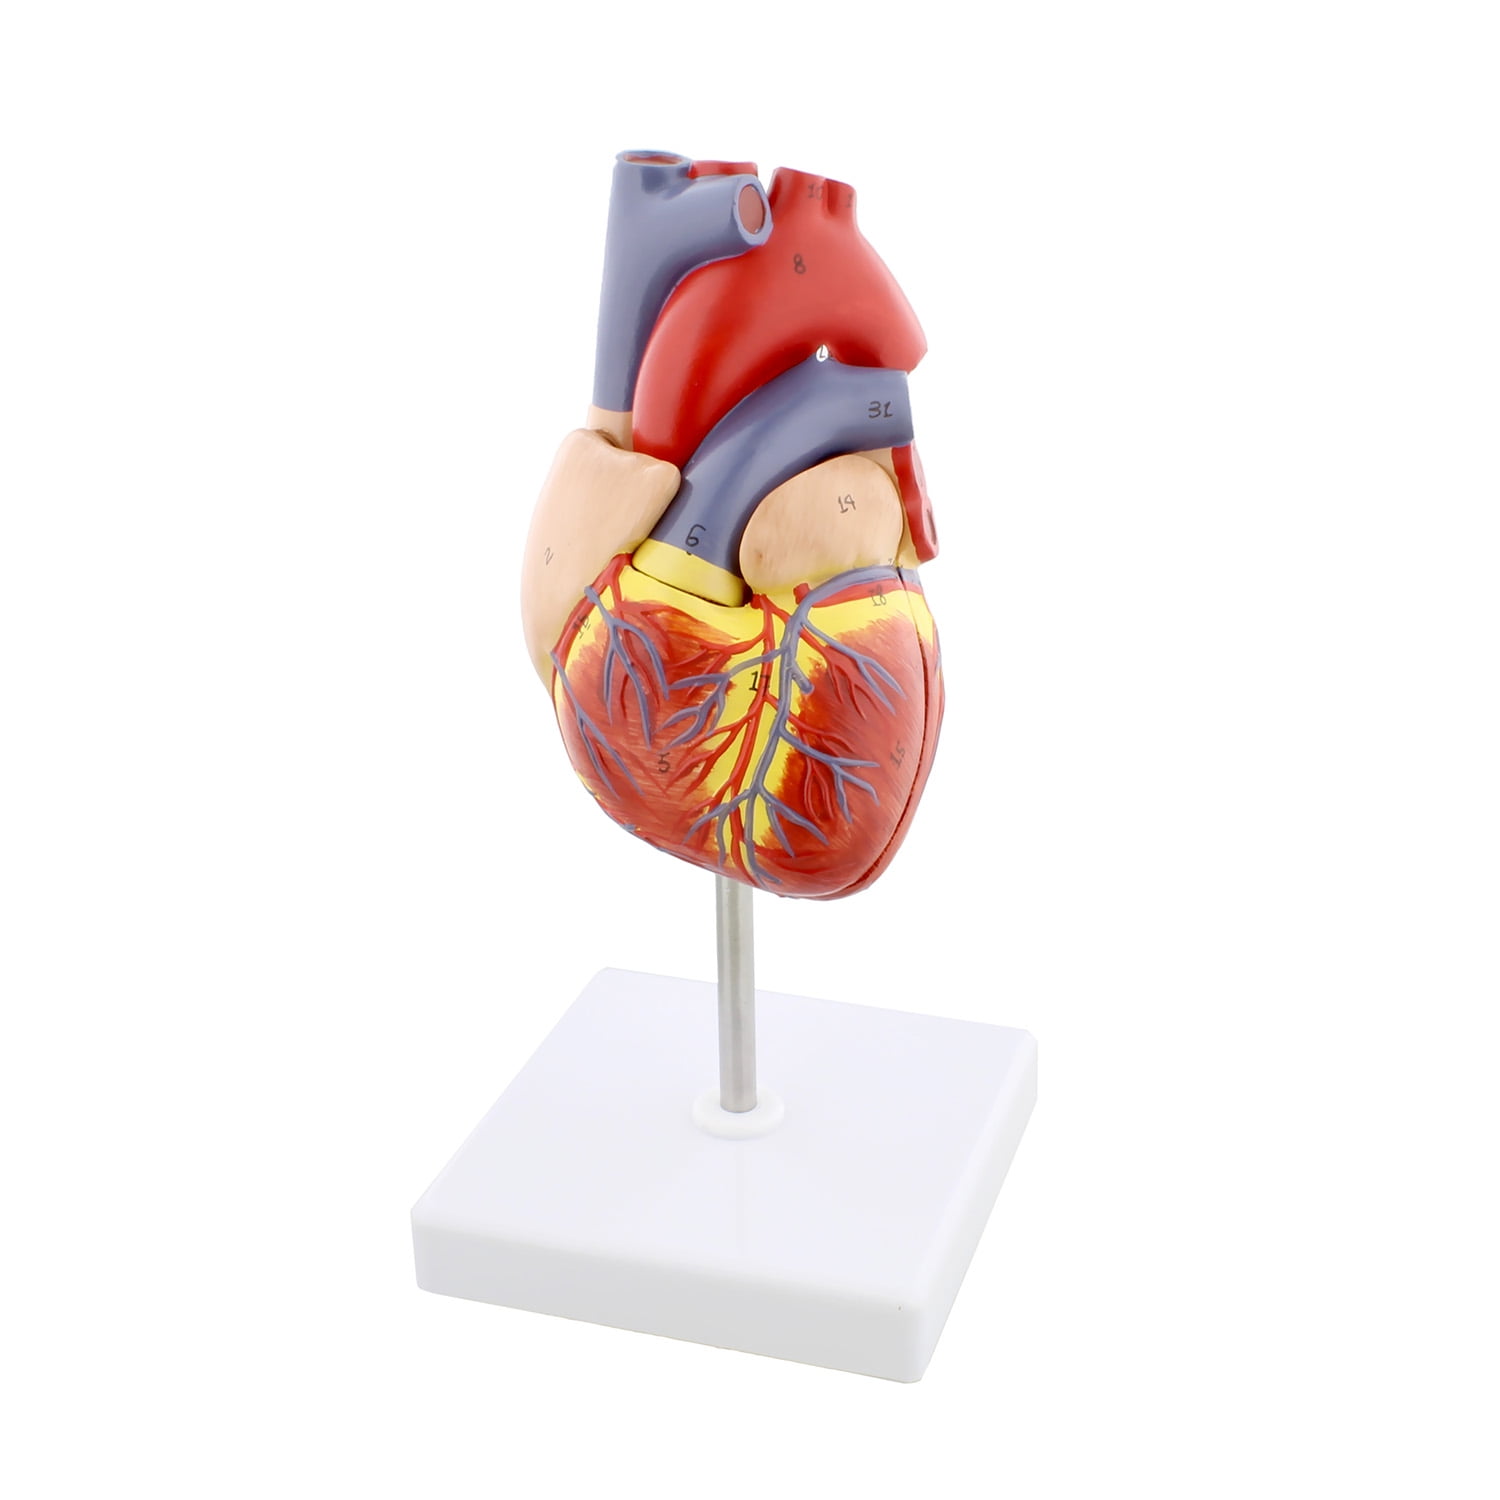 Transparent Torso Mensch Anatomie Modell 4D Set #26068 tedco toys 